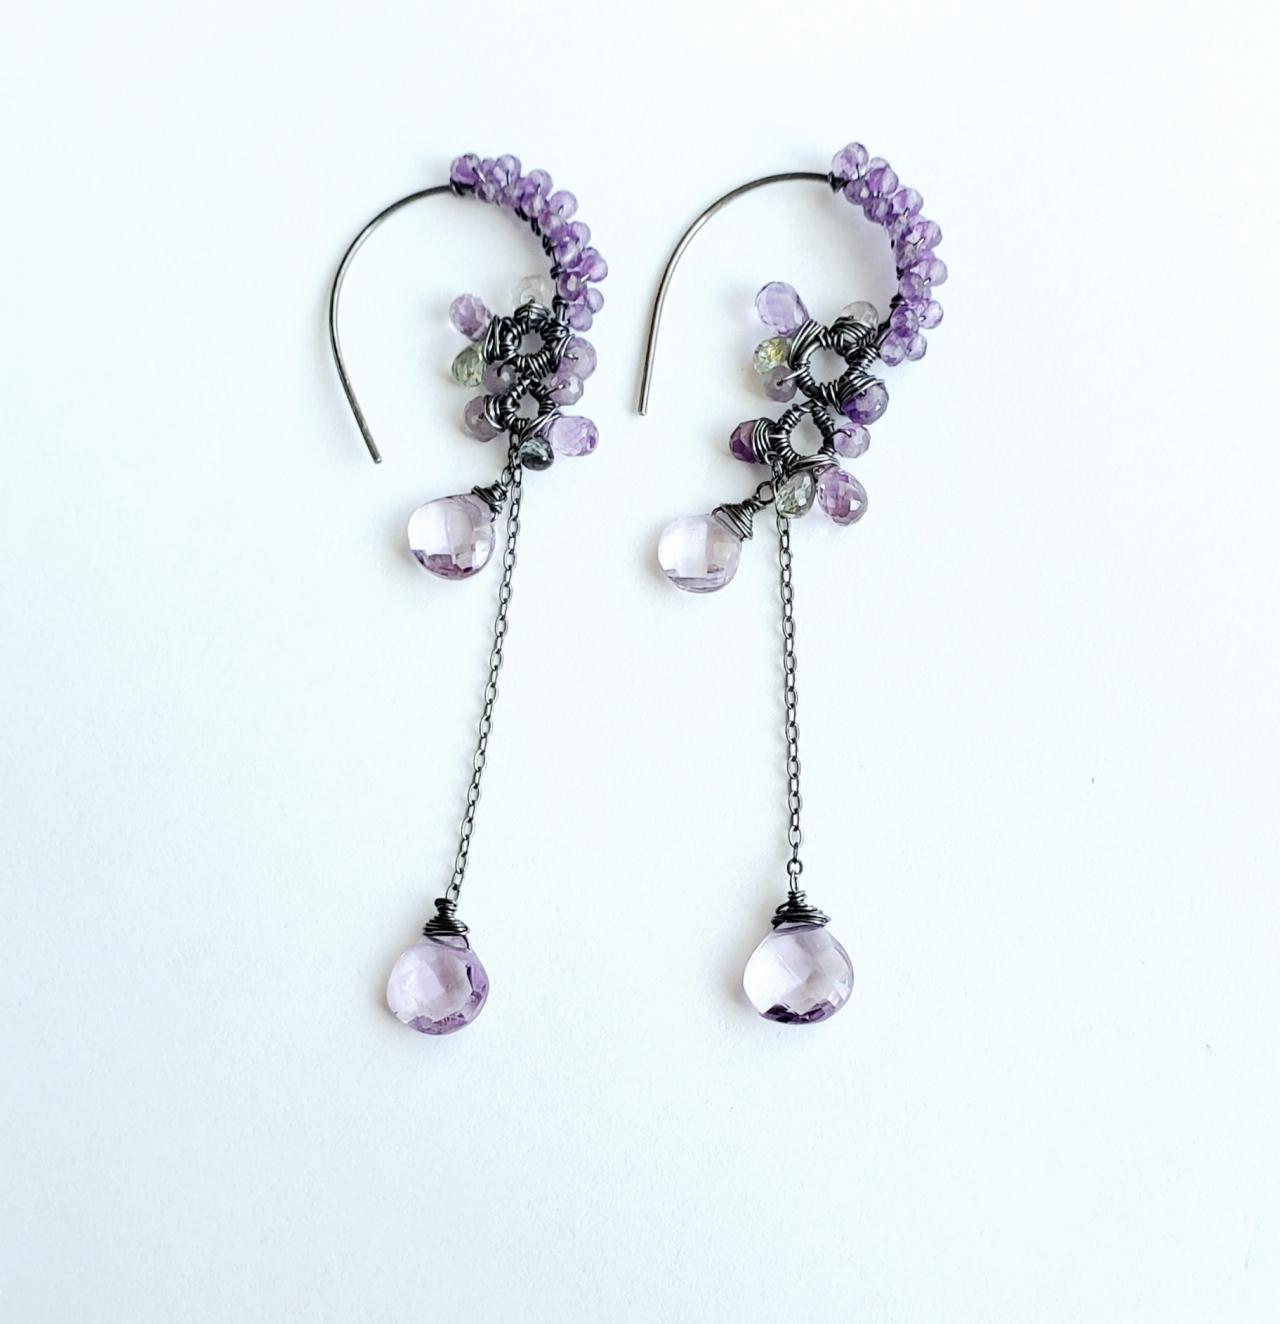 Sterling Silver Artisan Handmade Earrings, Gemstone Purple Wisteria Chandelier Hoop, Natural Gemstone Amethyst, Sapphire. Festival Jewelry